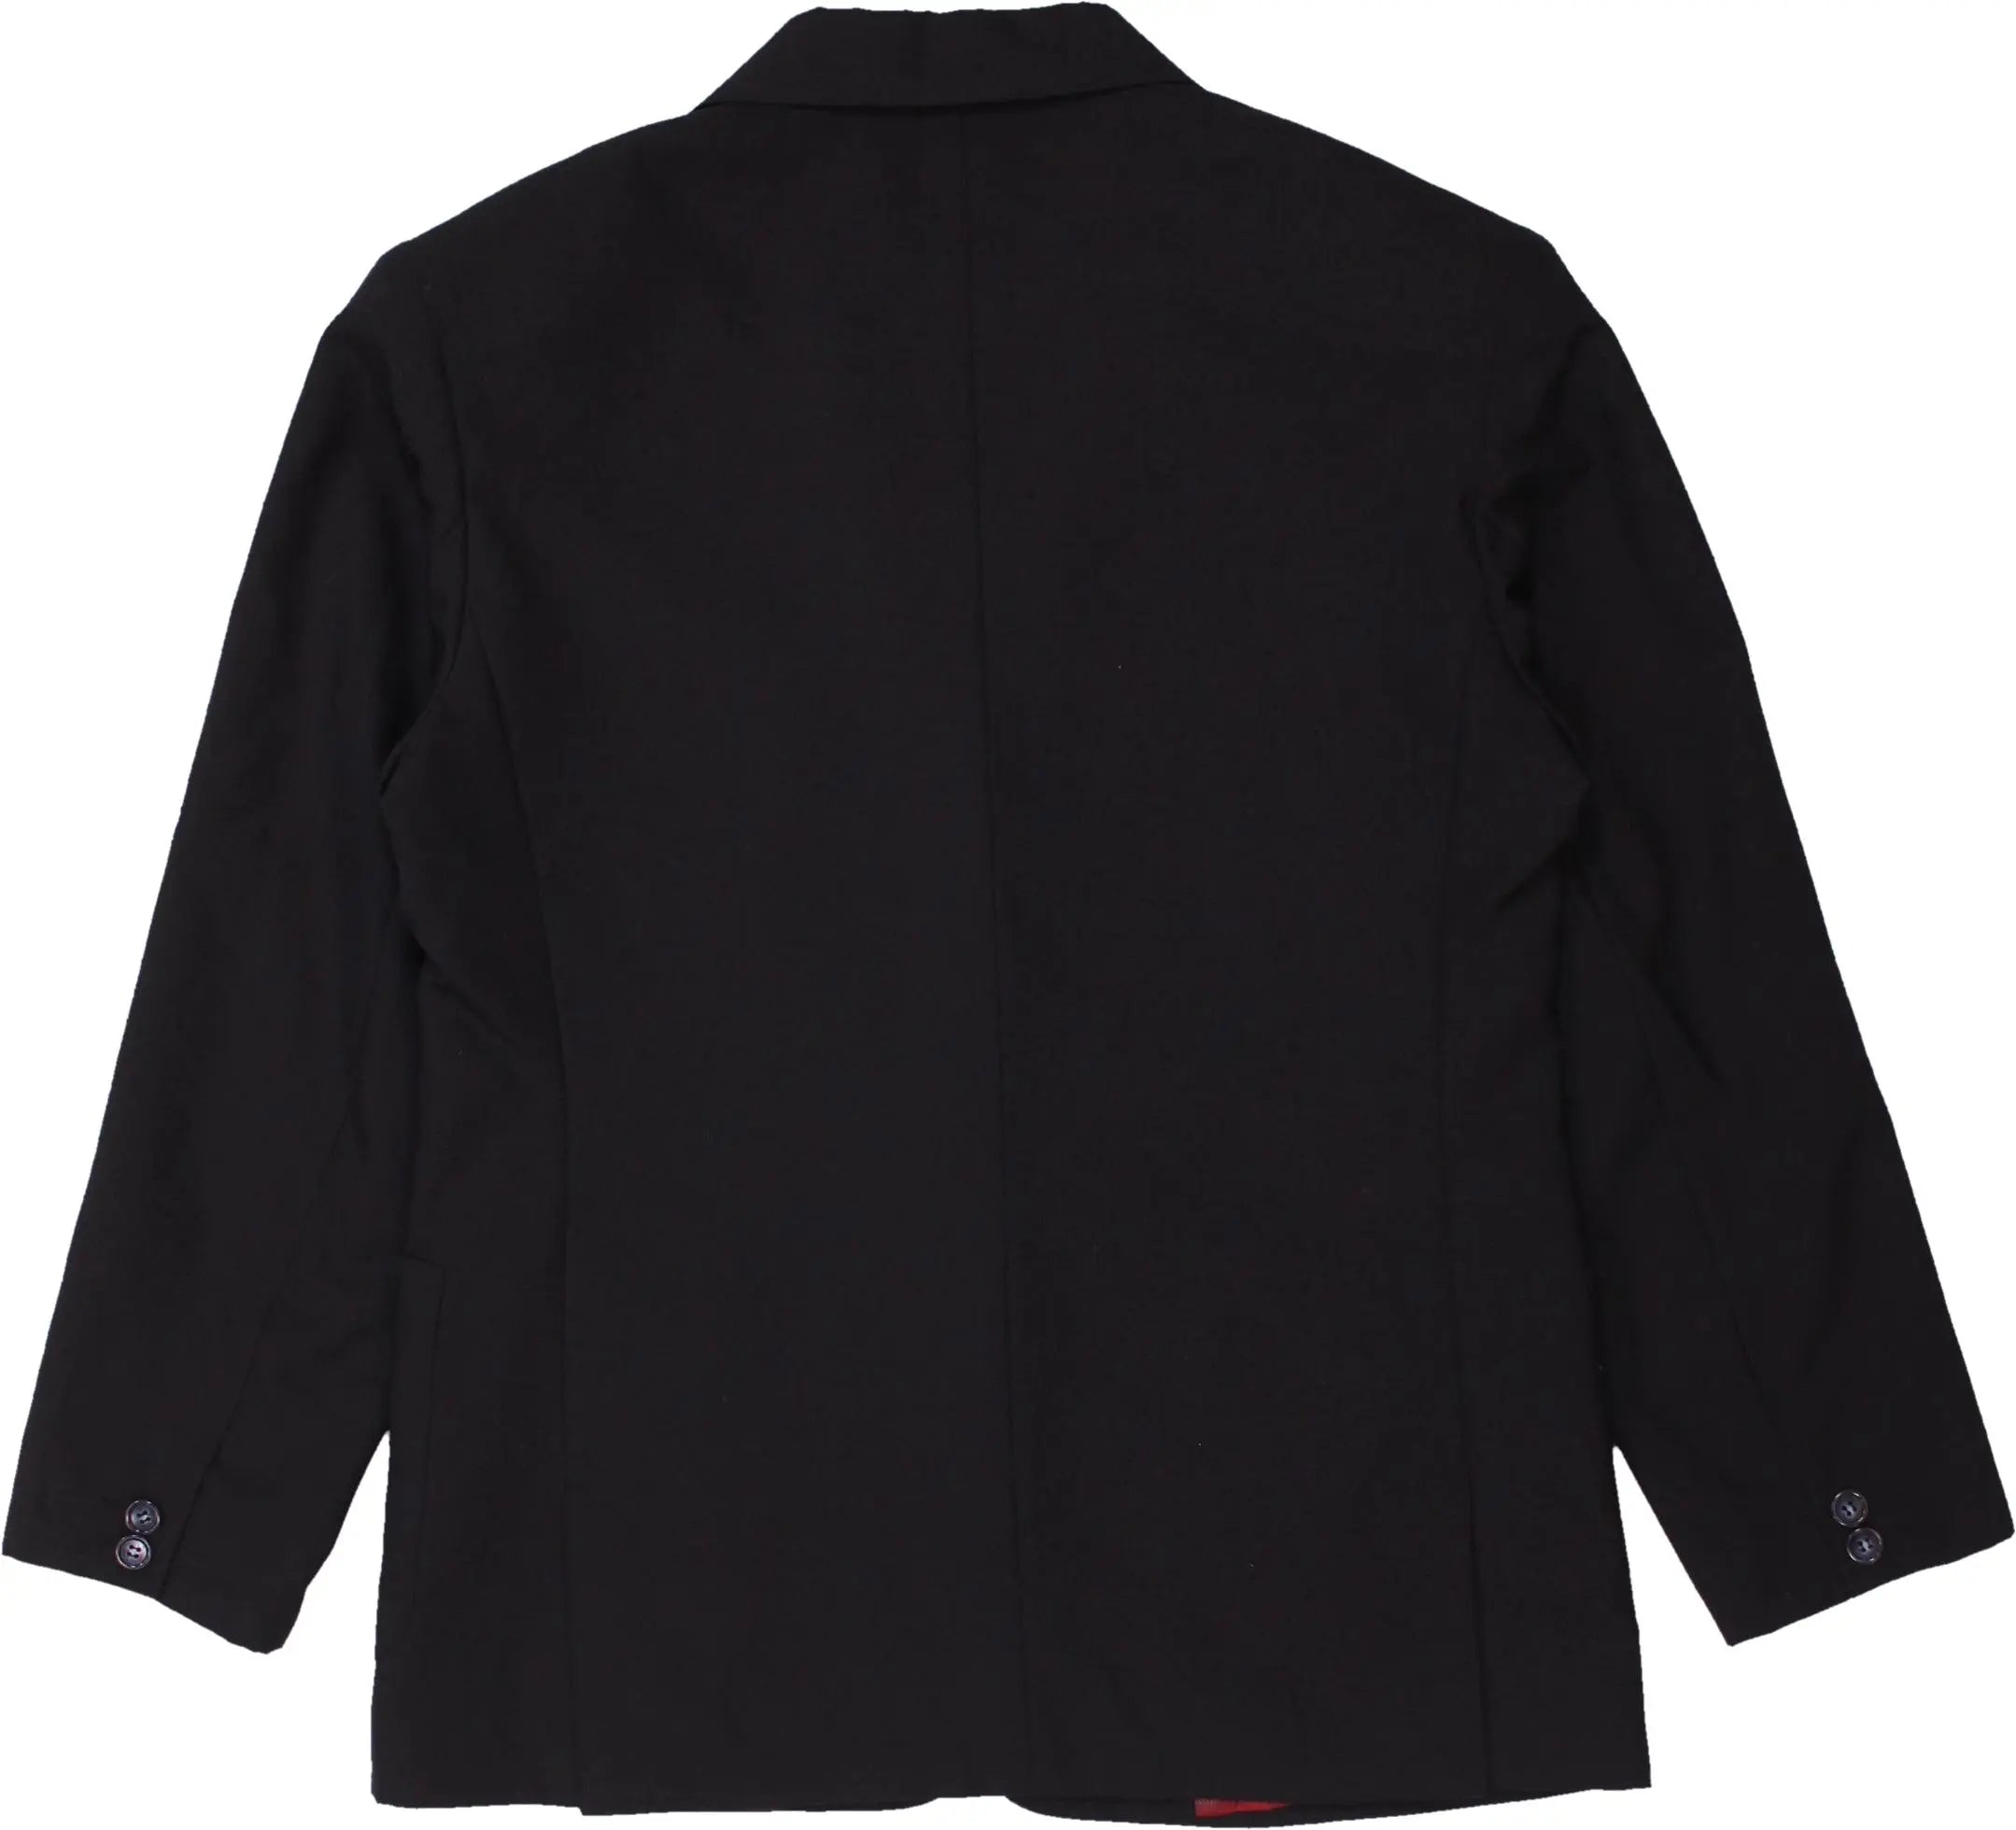 Giorgio Armani Junior - Black Blazer by Armani Junior- ThriftTale.com - Vintage and second handclothing